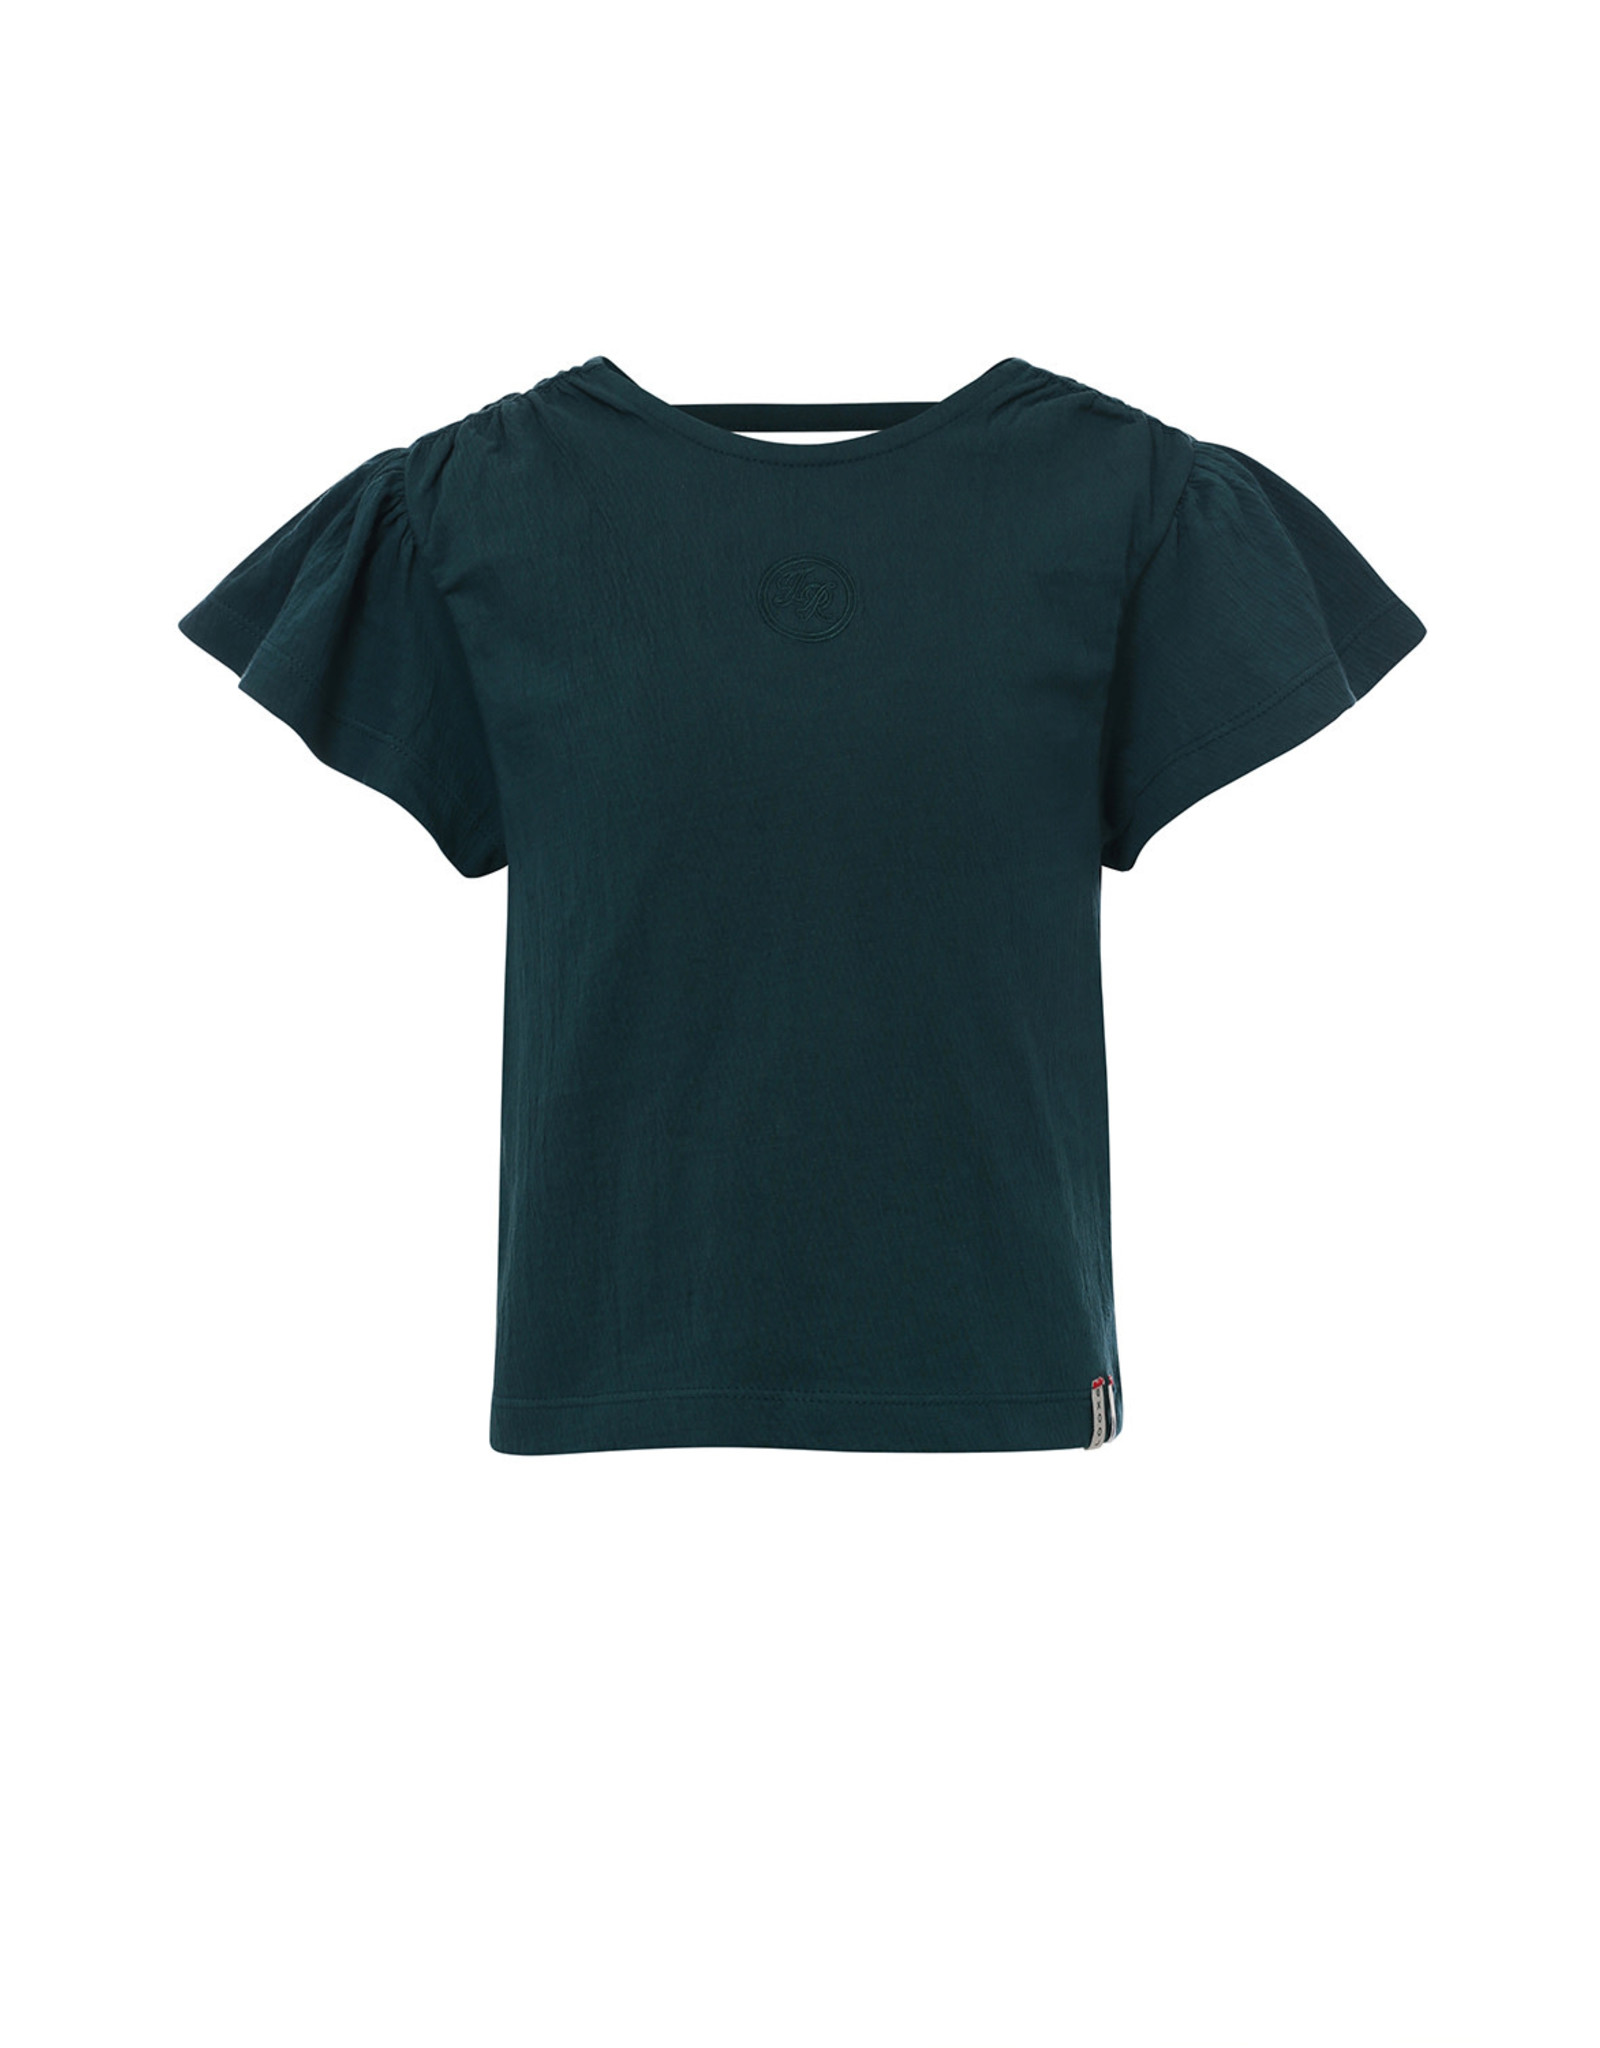 Looxs 10sixteen Crinkle jersey T-shirt Petrol green